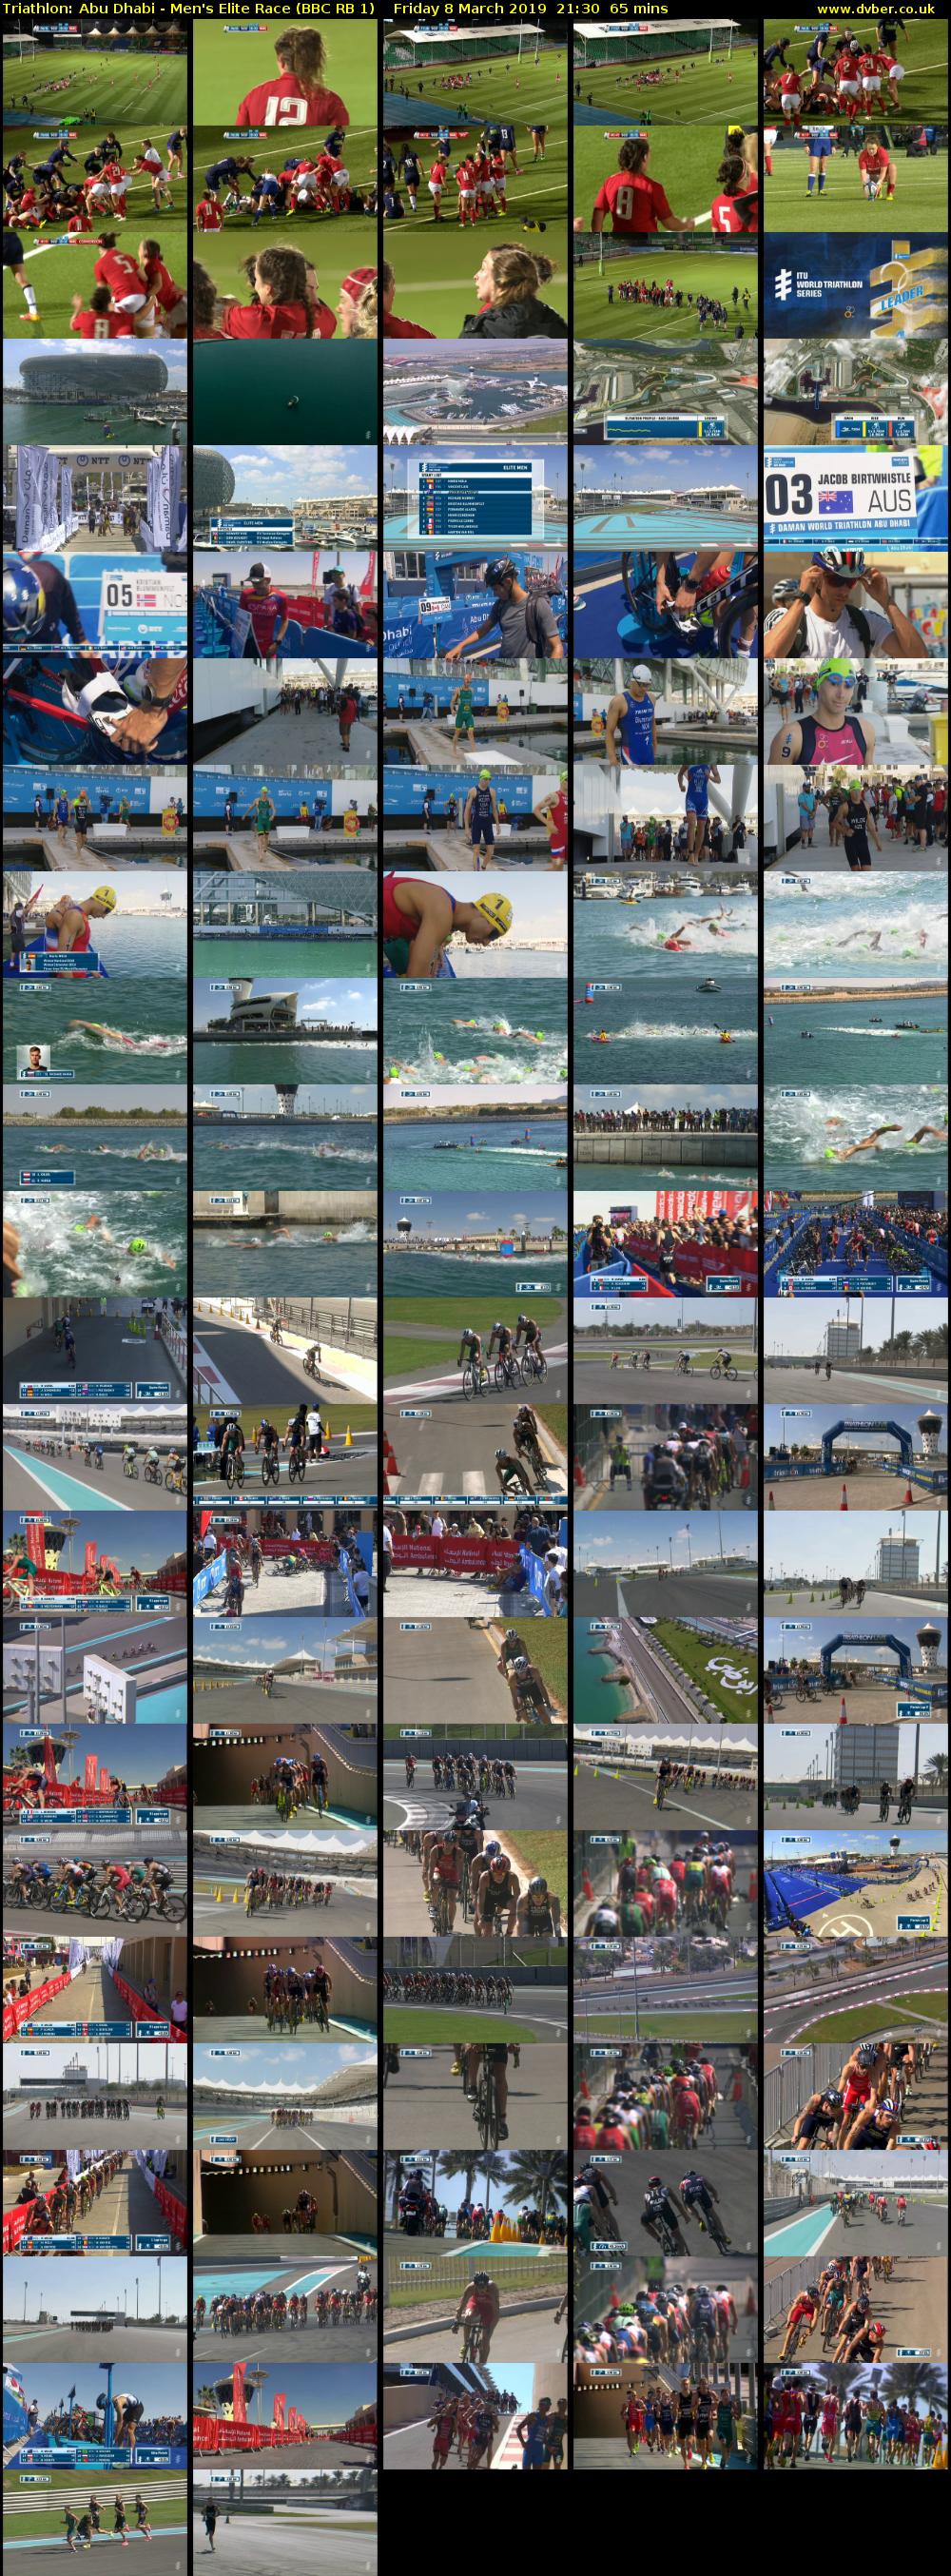 Triathlon: Abu Dhabi - Men's Elite Race (BBC RB 1) Friday 8 March 2019 21:30 - 22:35